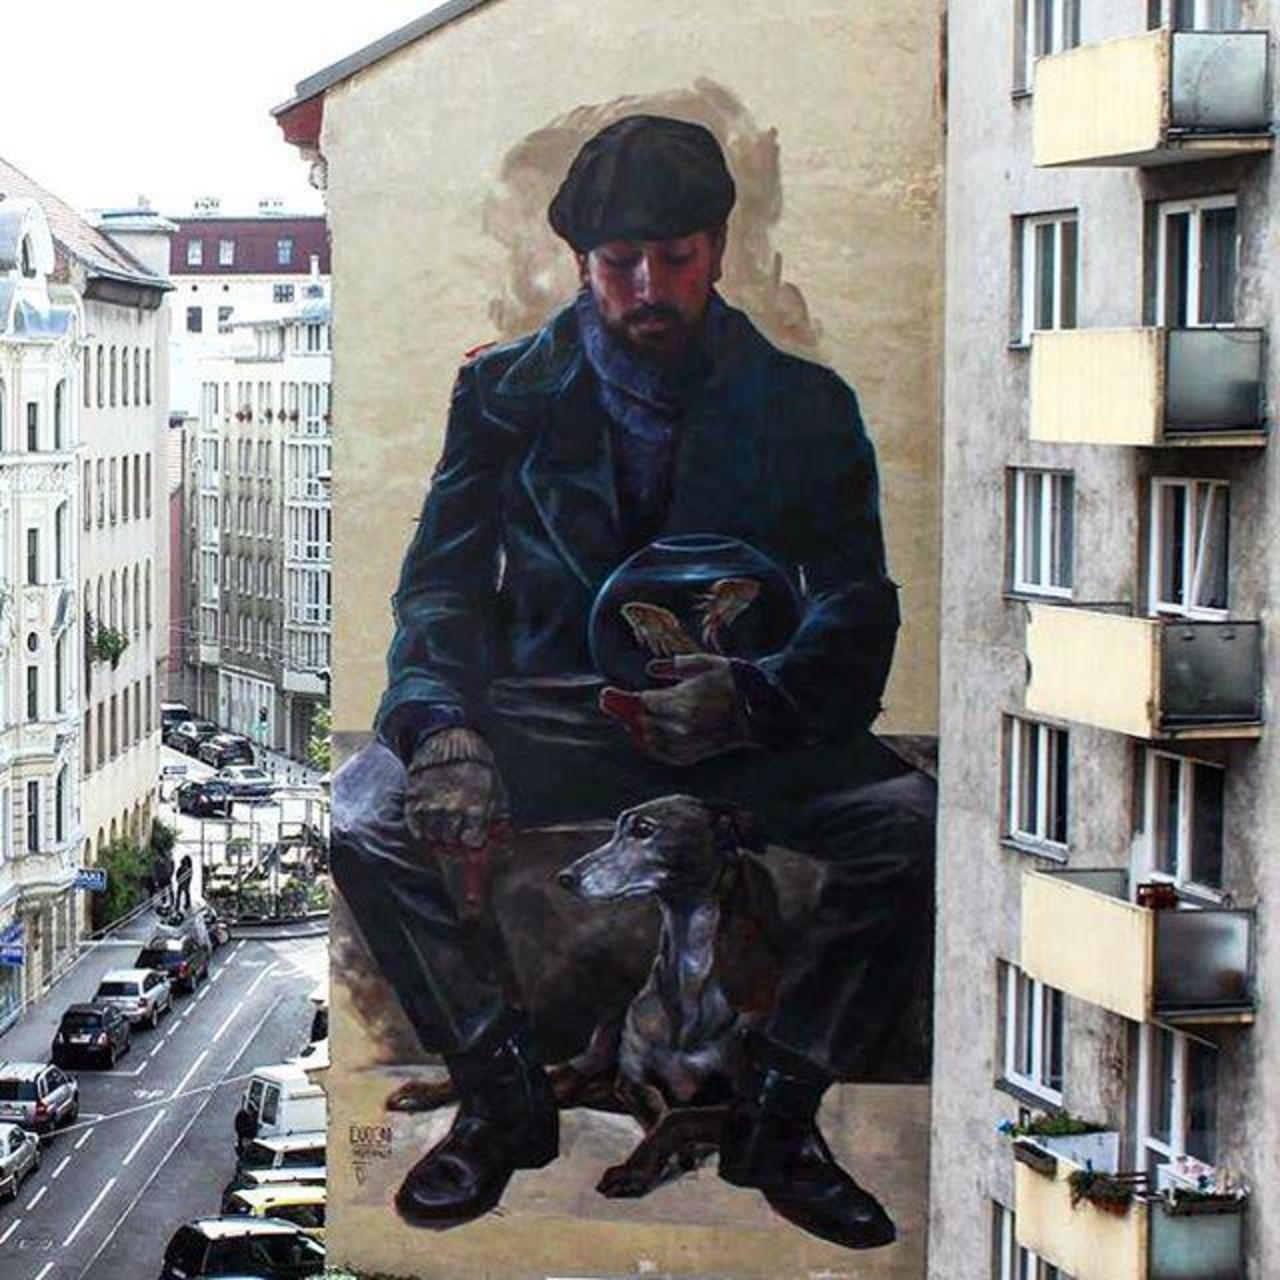 Evoca1 unveils a new mural in Vienna, Austria. #StreetArt #Graffiti #Mural http://t.co/EZEAunr6Vj